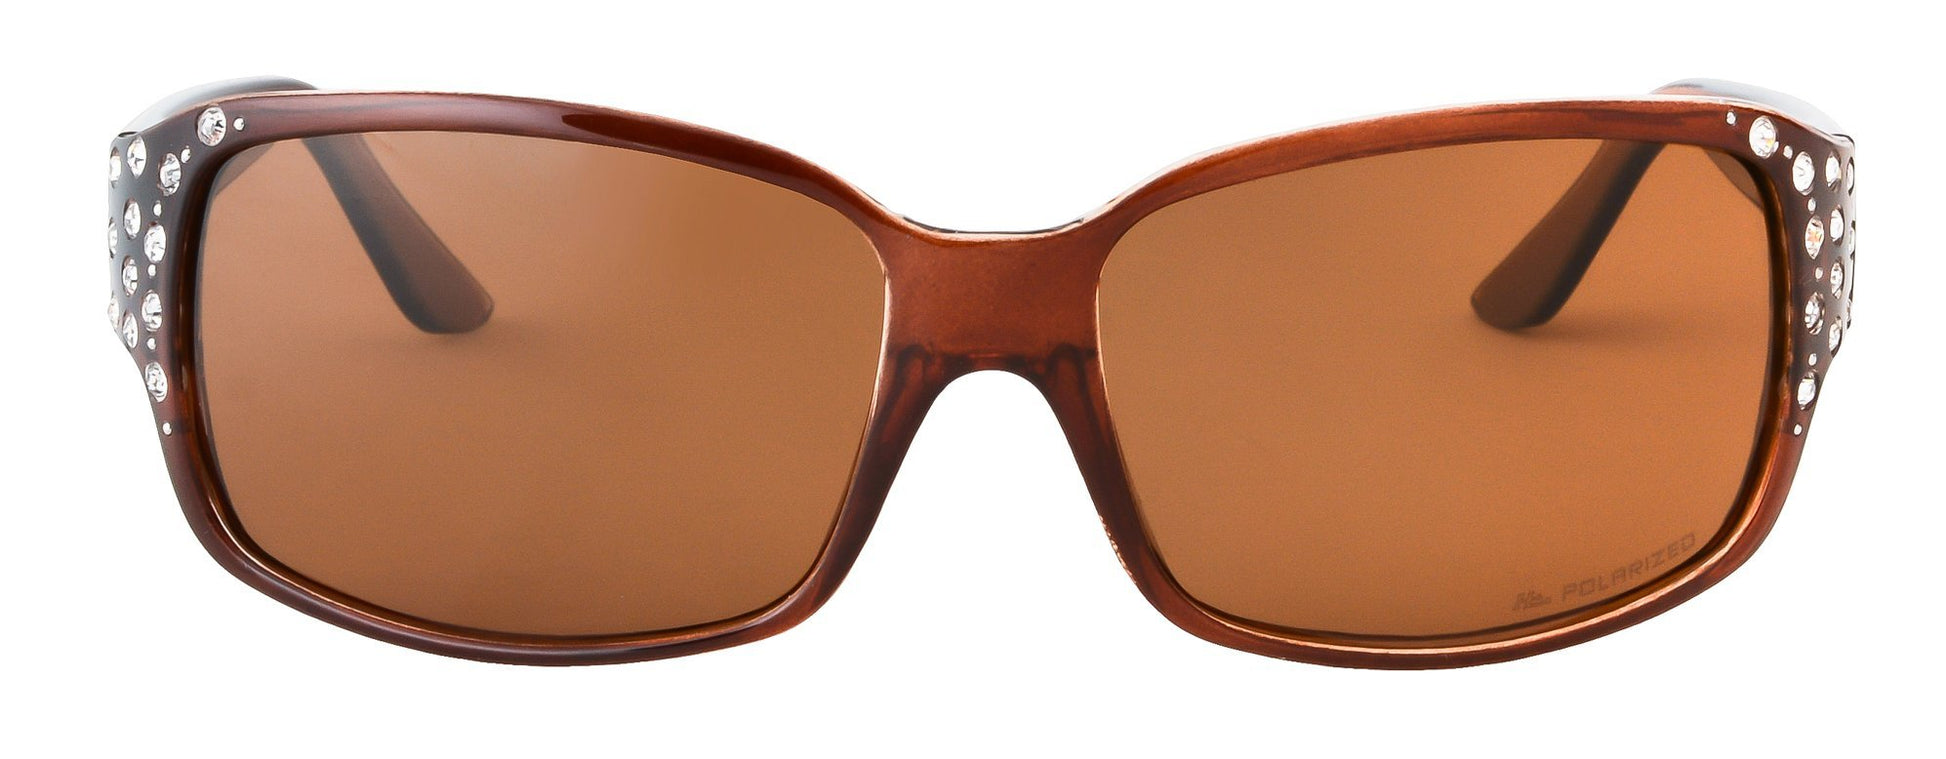 Second image: Polarized Sunglasses for Women - Premium Amber Fashion Sunglasses - HZ Series Diamante Womens Designer Sunglasses